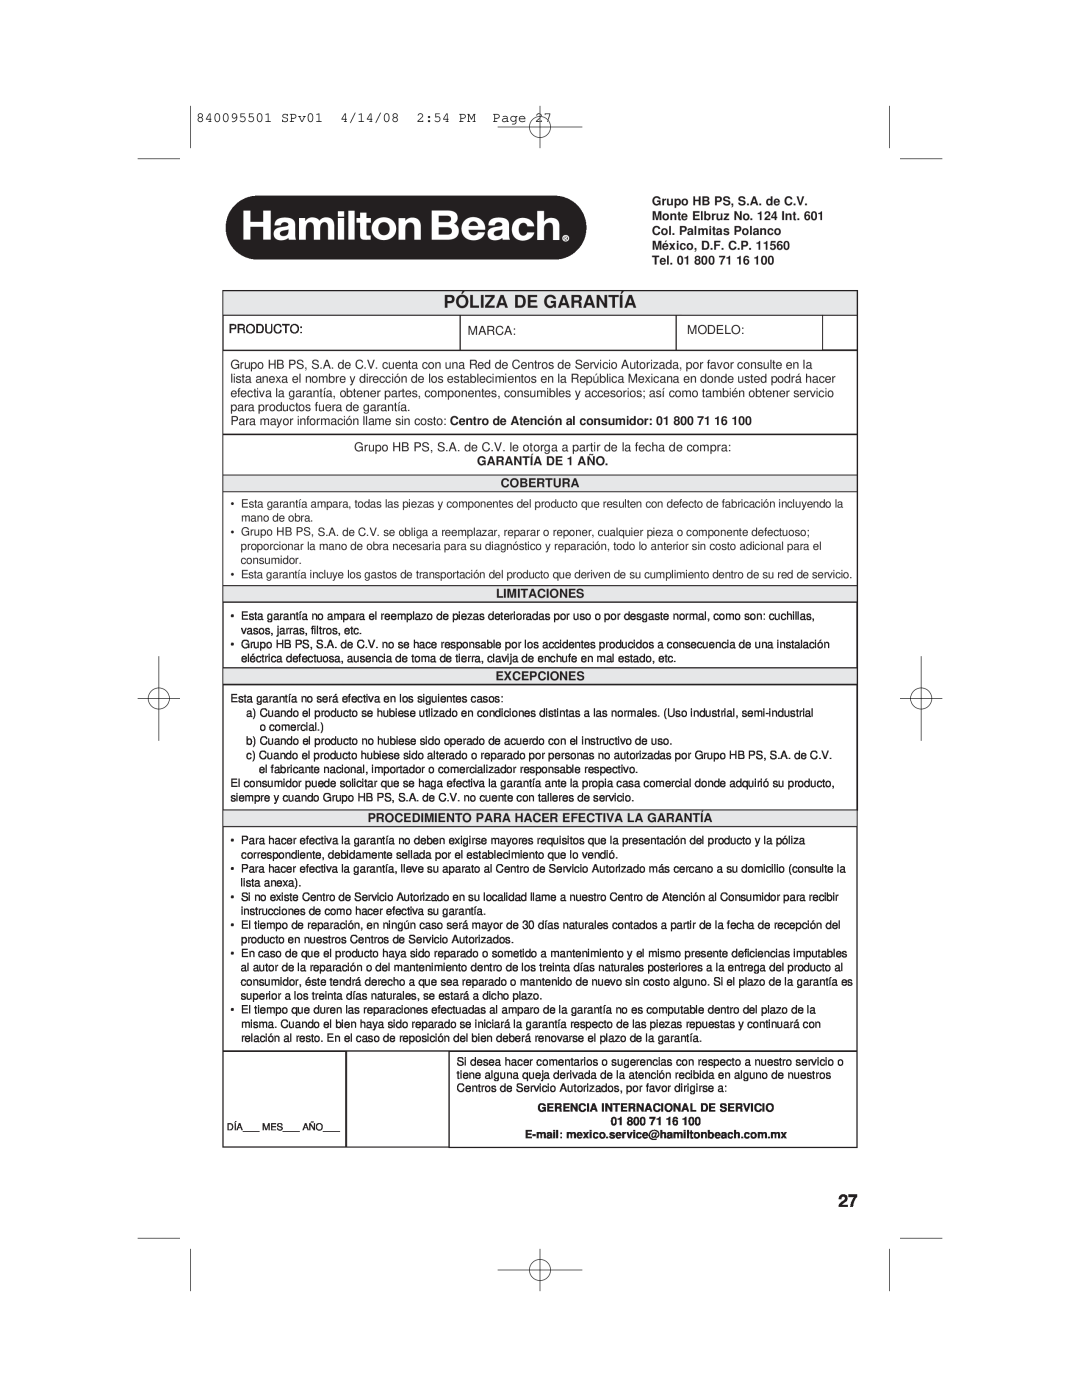 Hamilton Beach manual Póliza De Garantía, 840095501 SPv01 4/14/08 2 54 PM Page 